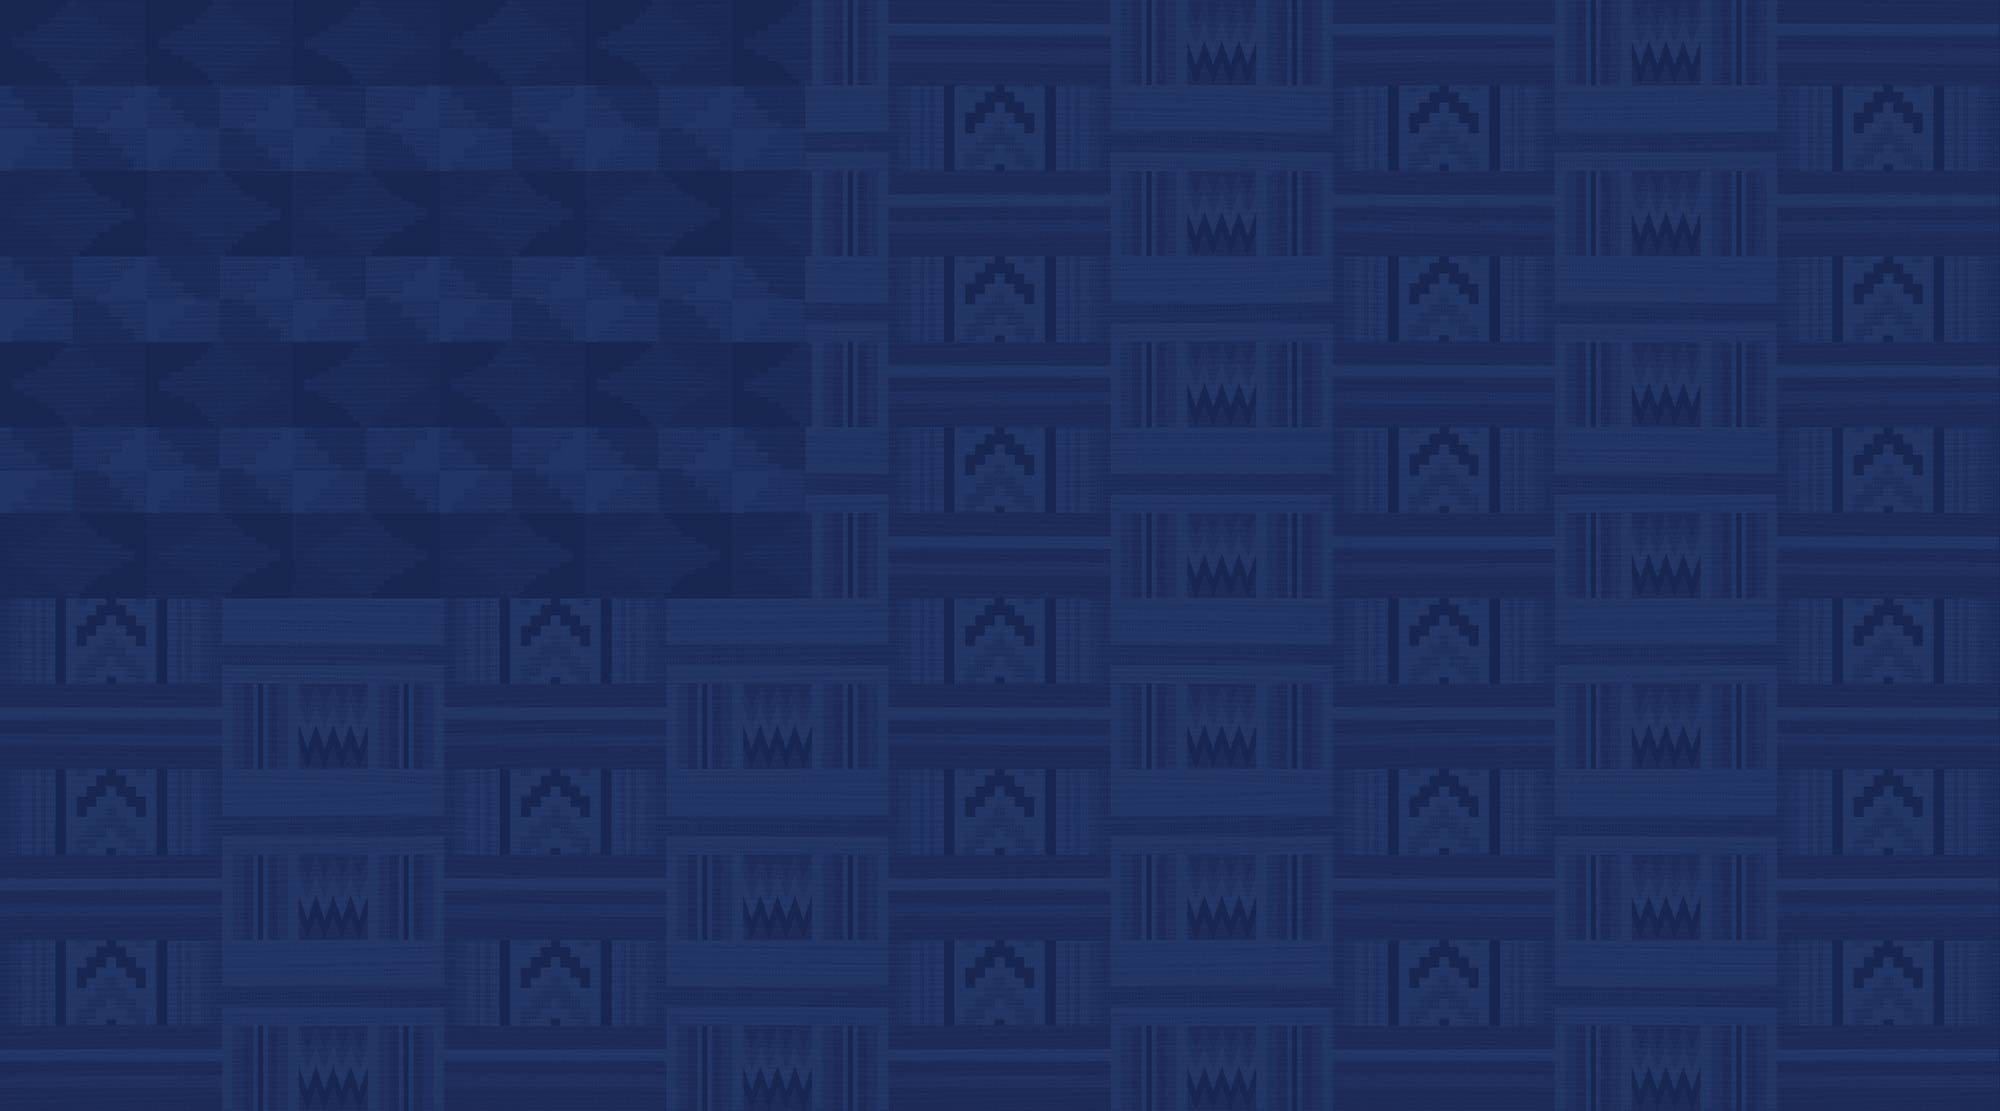 Blue background image resembles USA flag comprised of Kente patterns